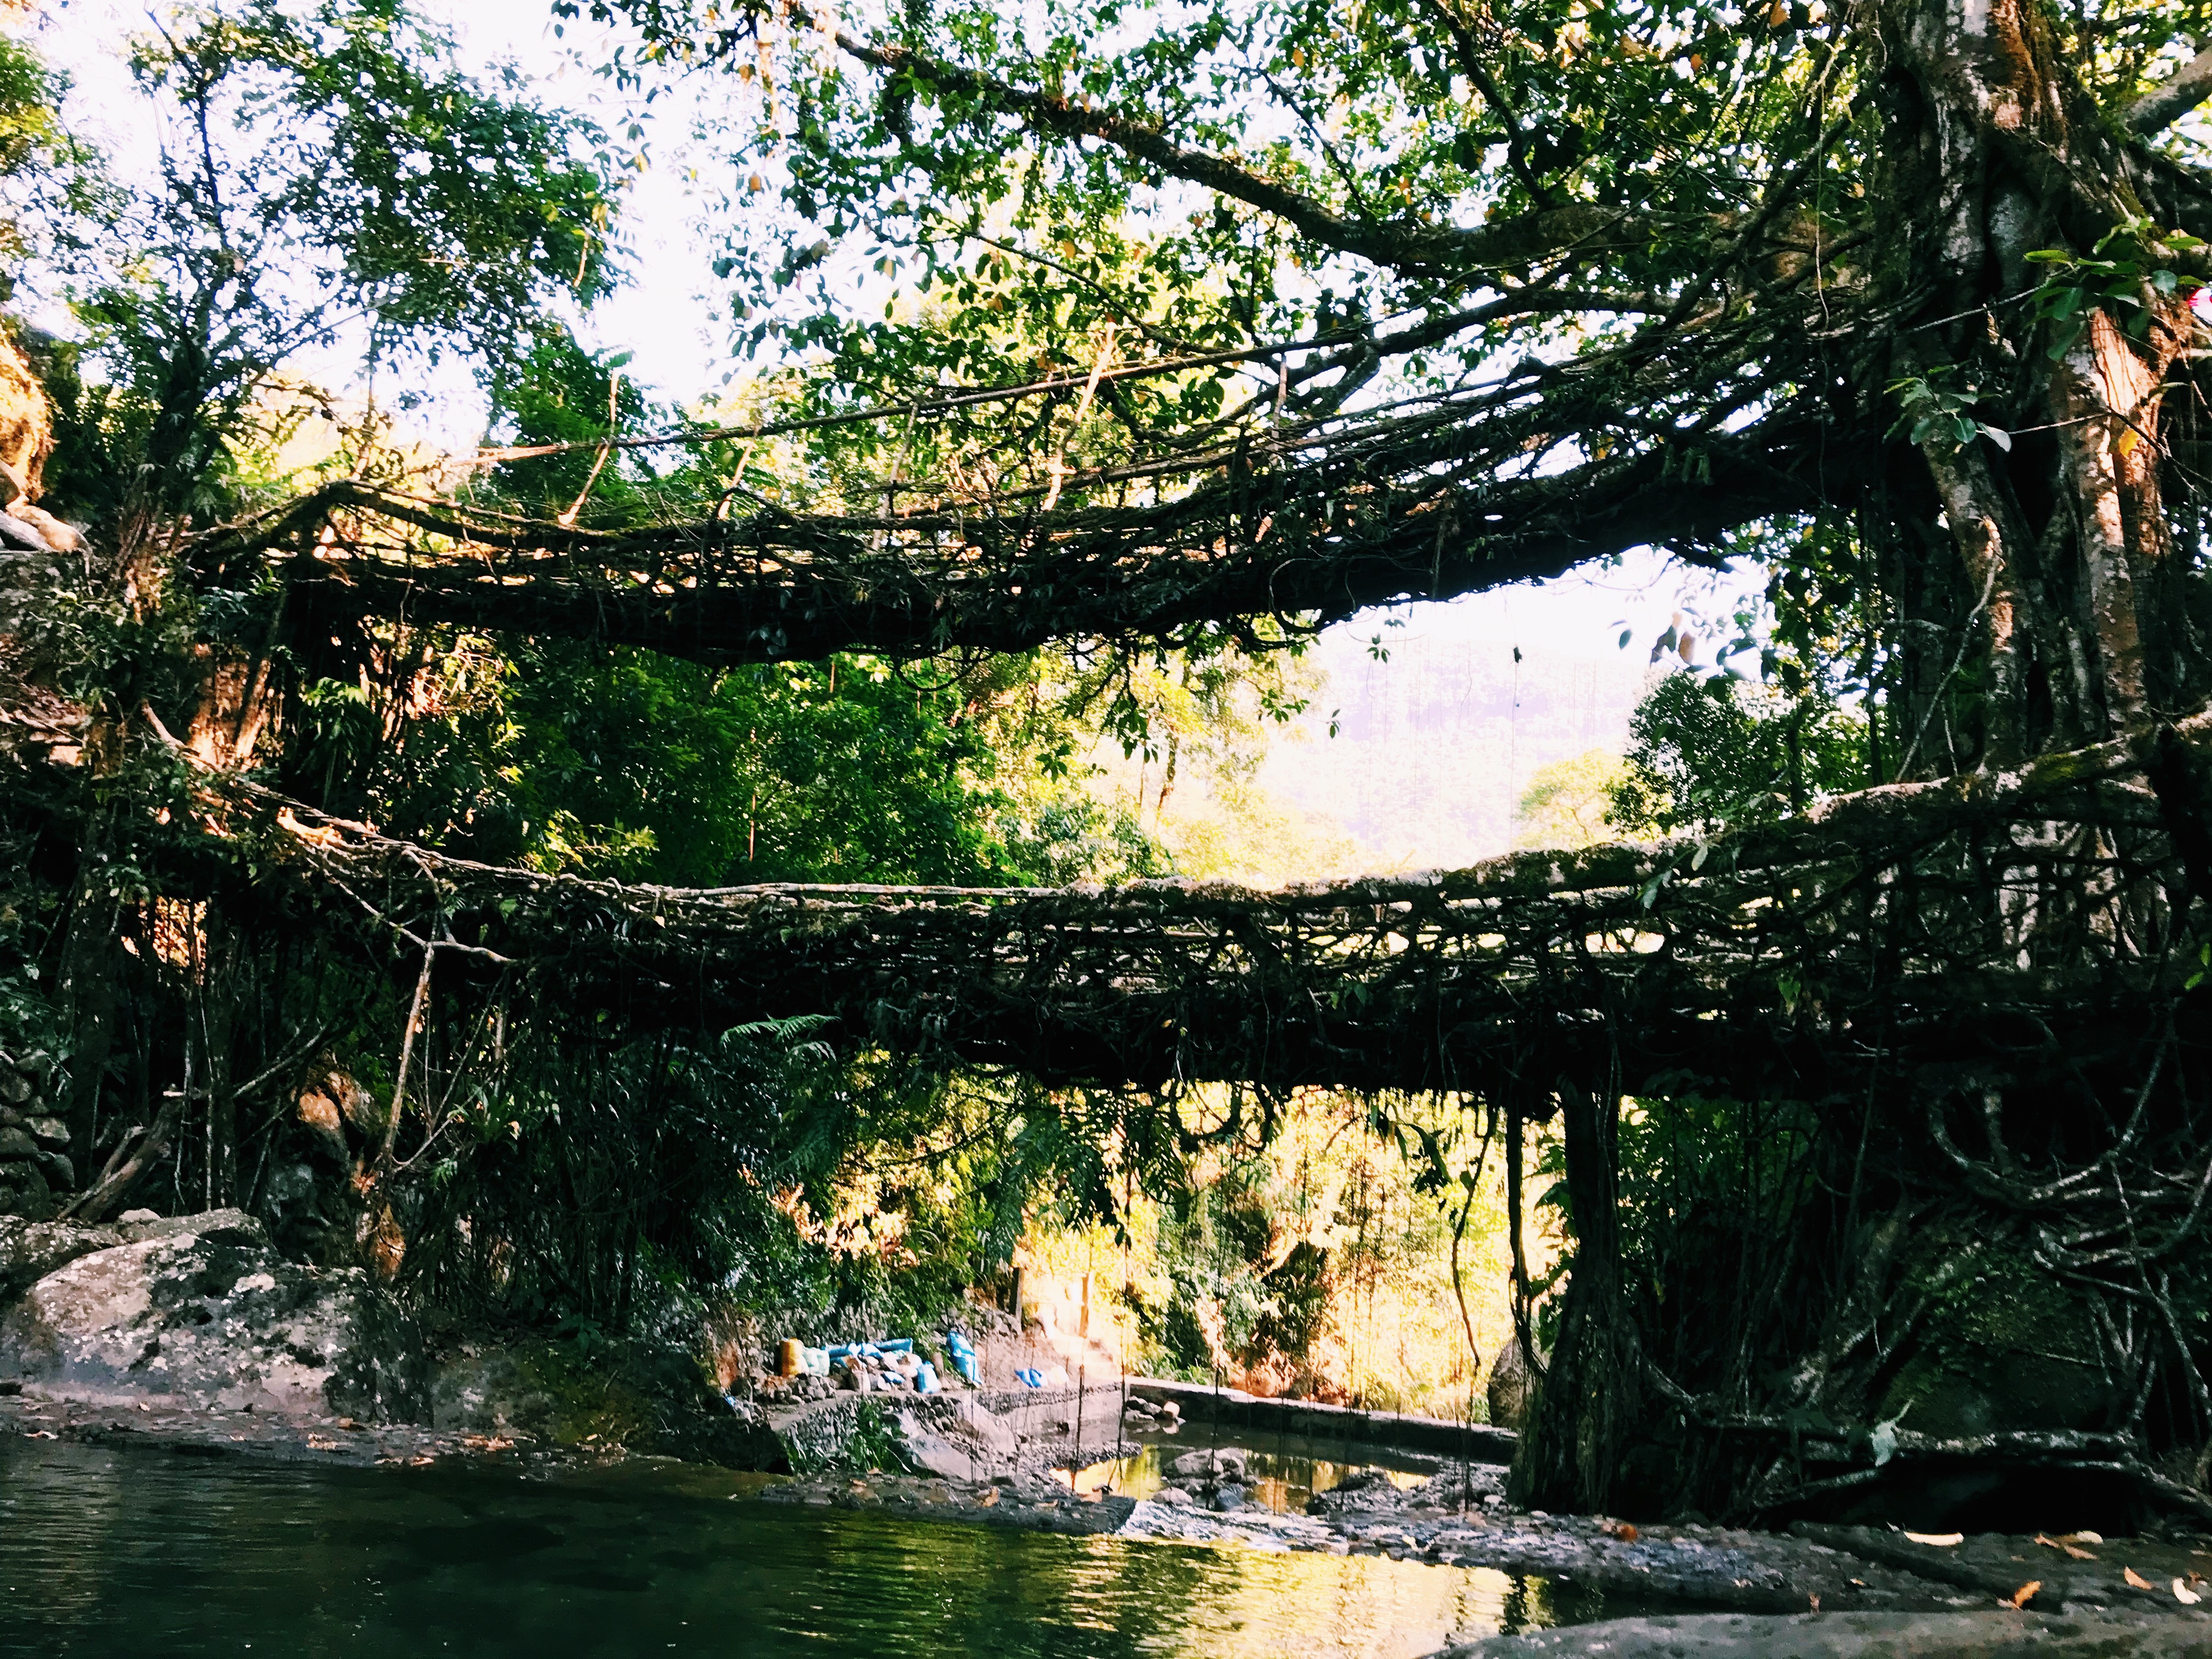 The Double Decker living root tree bridge